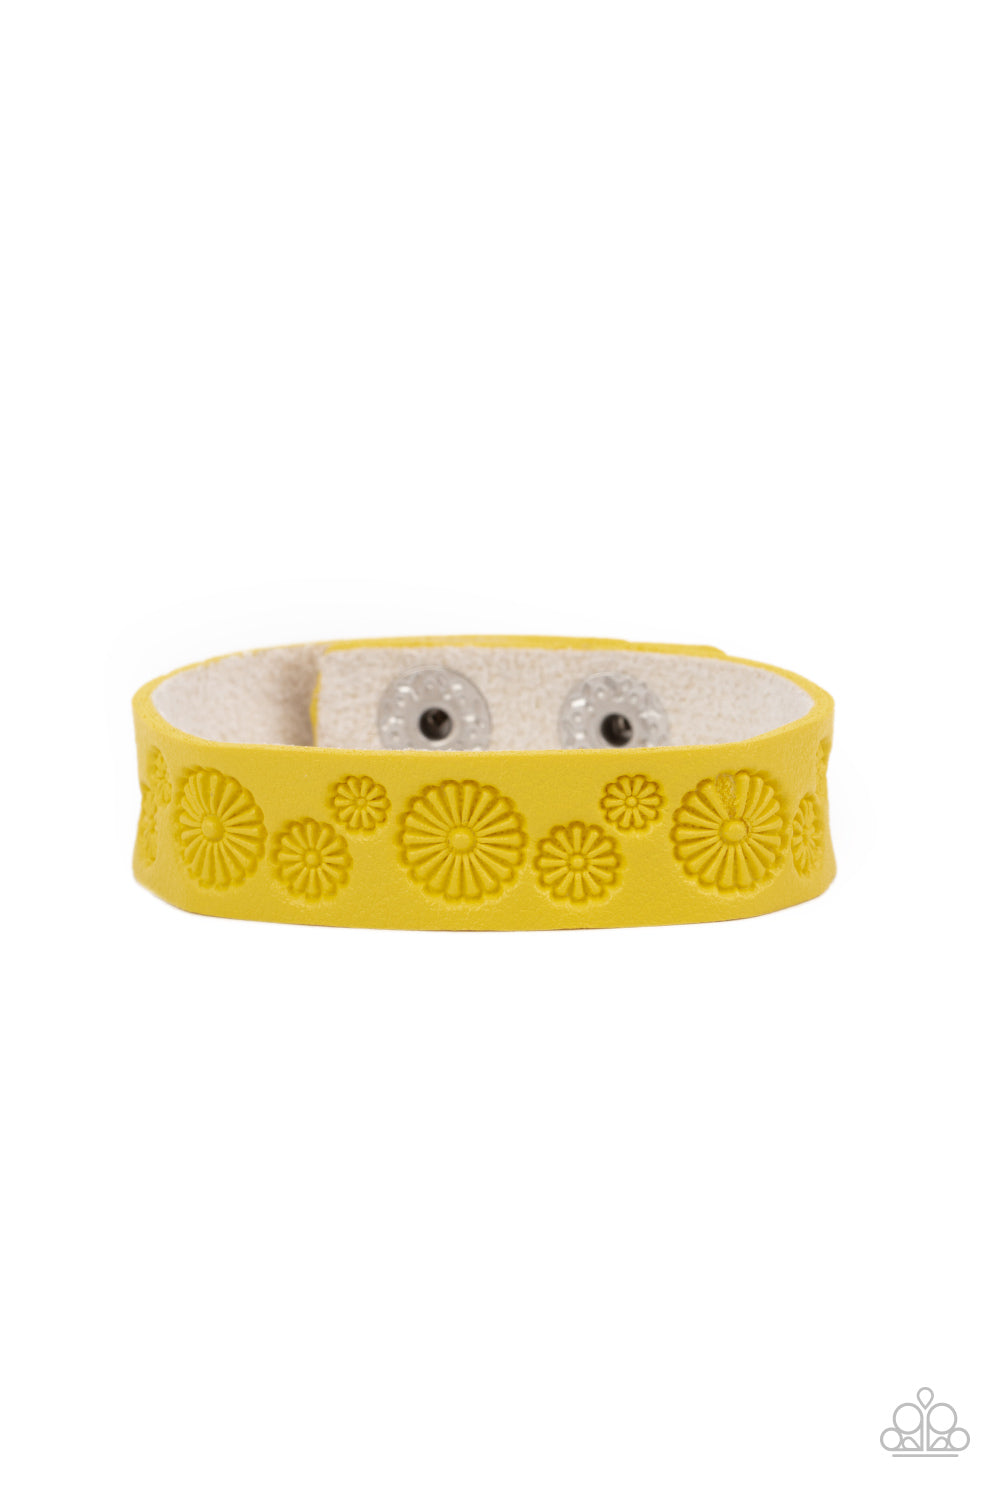 Follow The Wildflowers - Yellow Bracelet